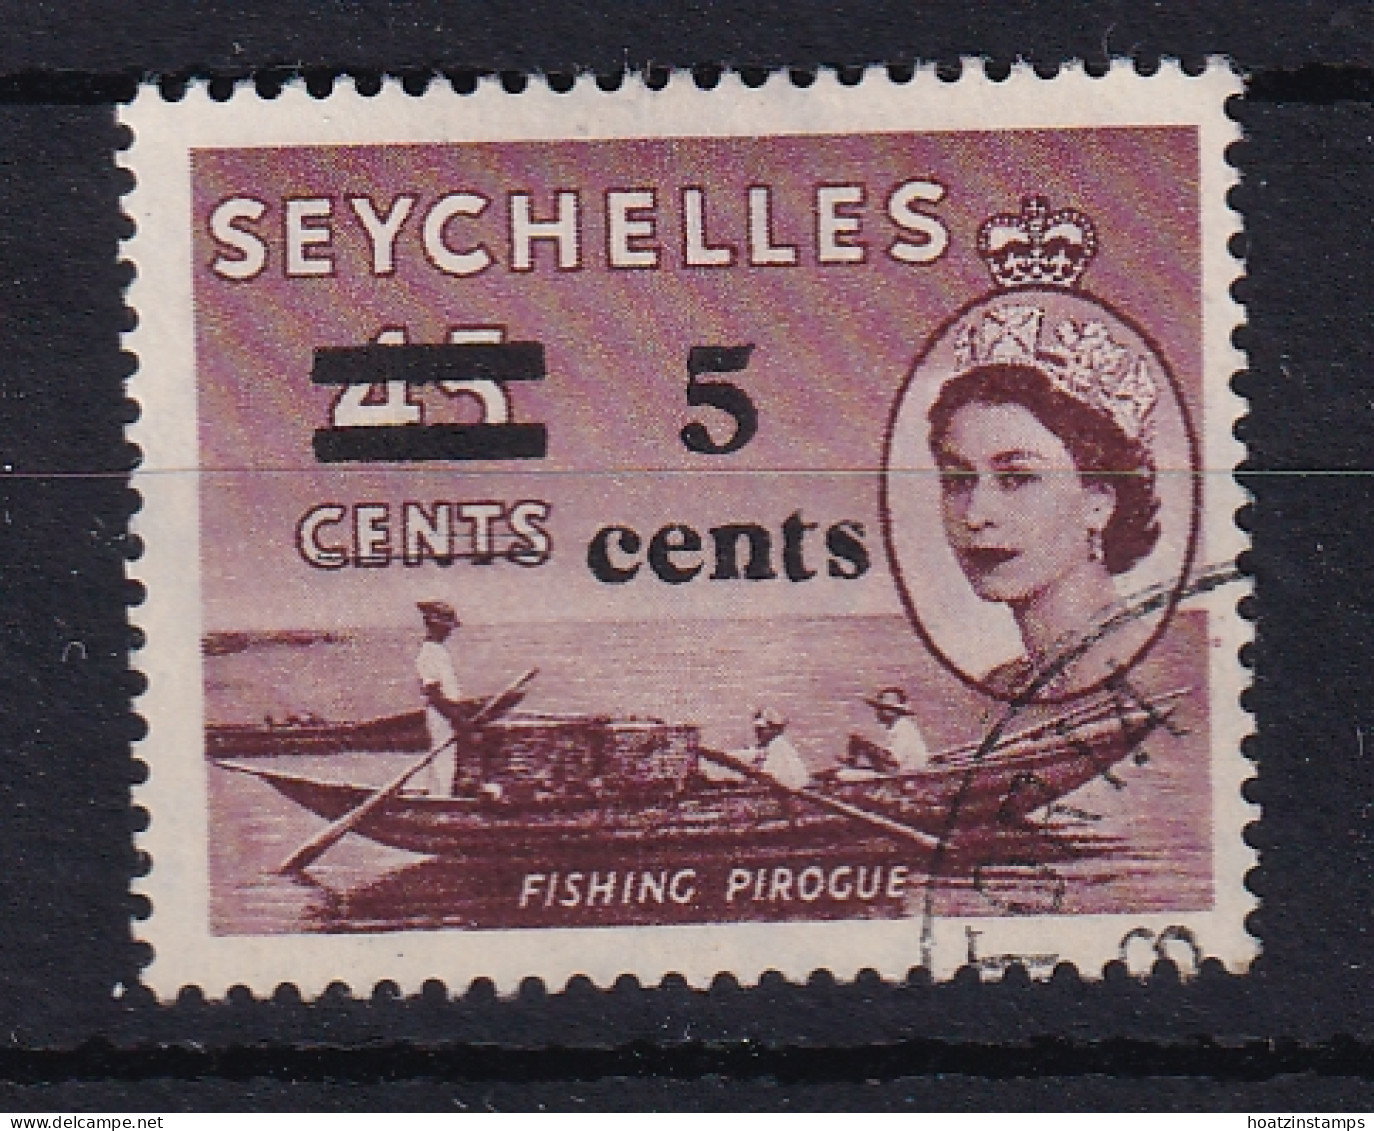 Seychelles: 1957   QE II - Surcharge   SG191   5c On 45c     Used - Seychelles (...-1976)